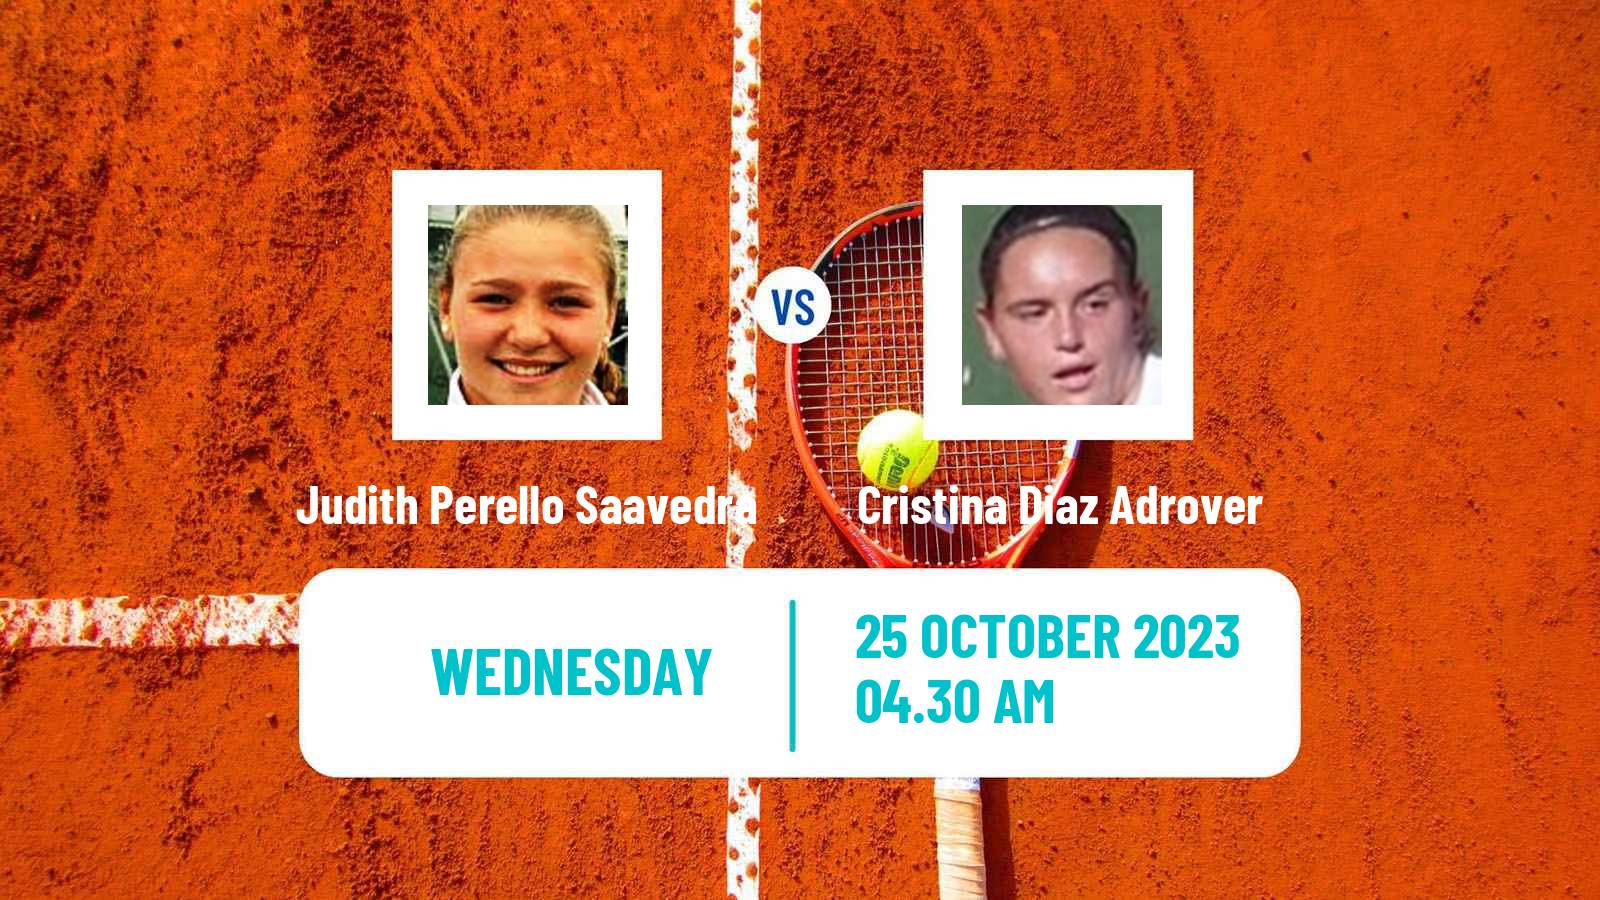 Tennis ITF W15 Villena Women Judith Perello Saavedra - Cristina Diaz Adrover